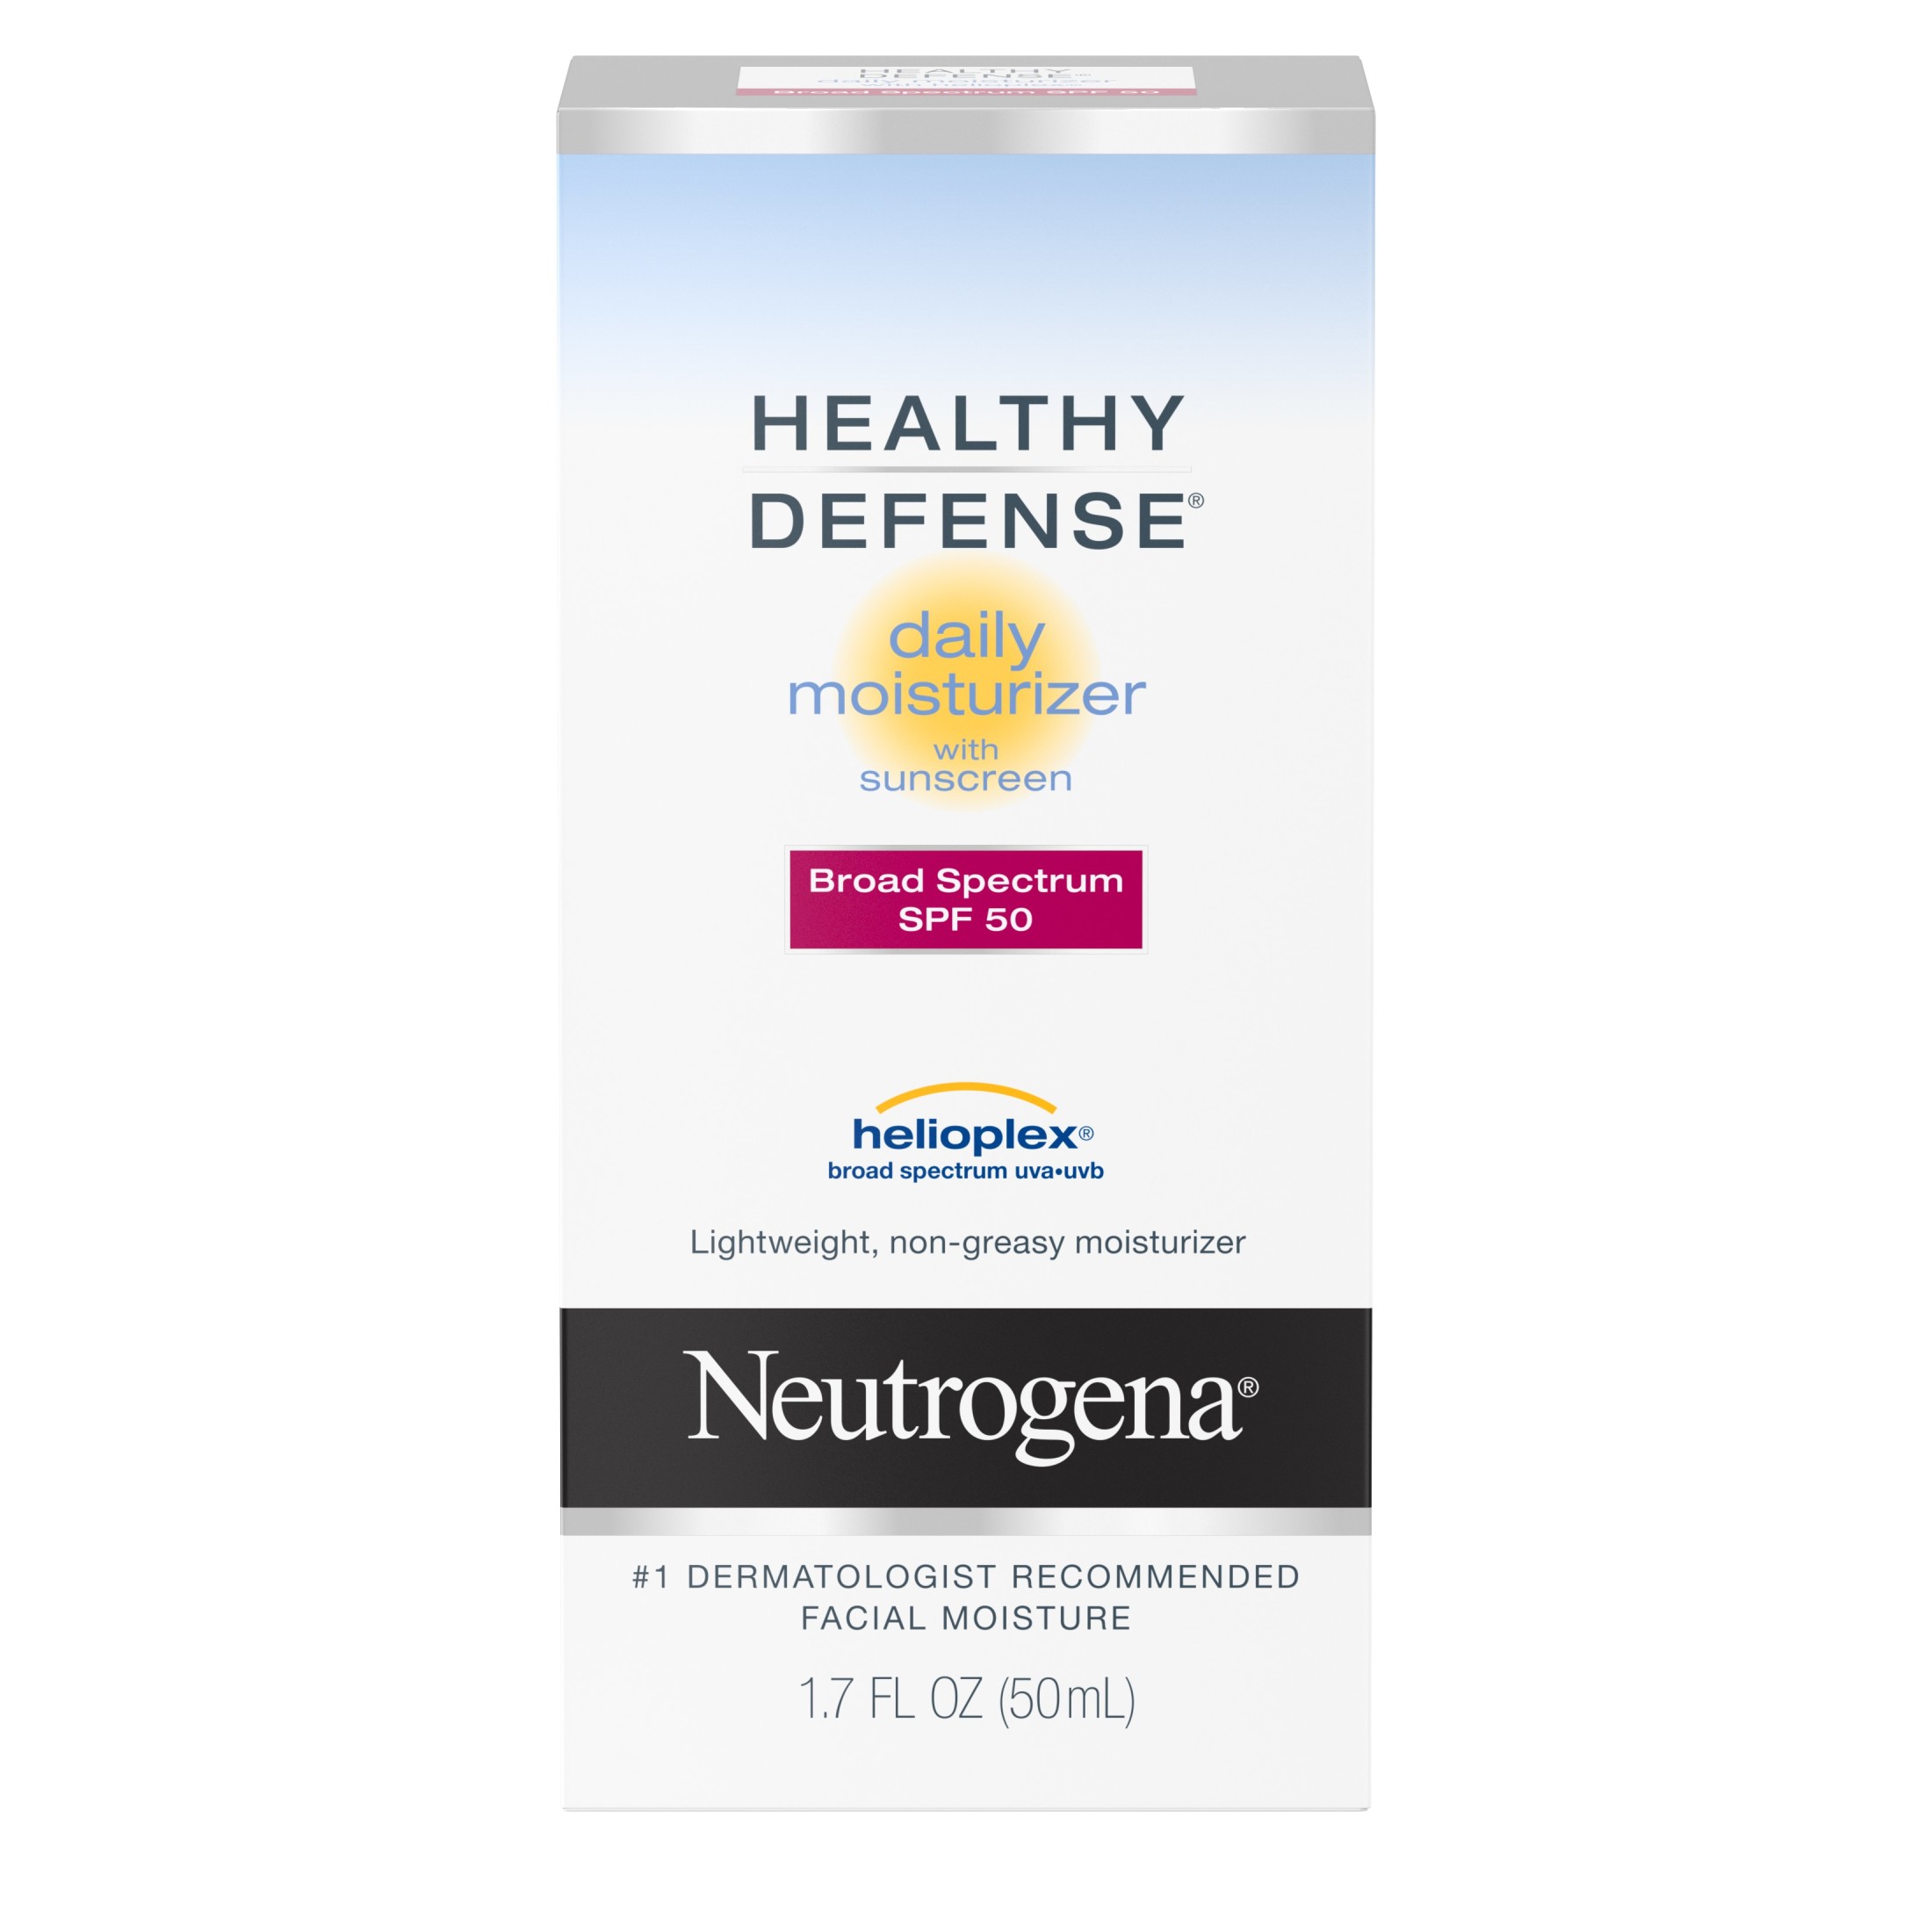 Neutrogena Healthy Defense Daily Face Moisturizer with SPF 50, 1.7 fl. oz - image 1 of 17